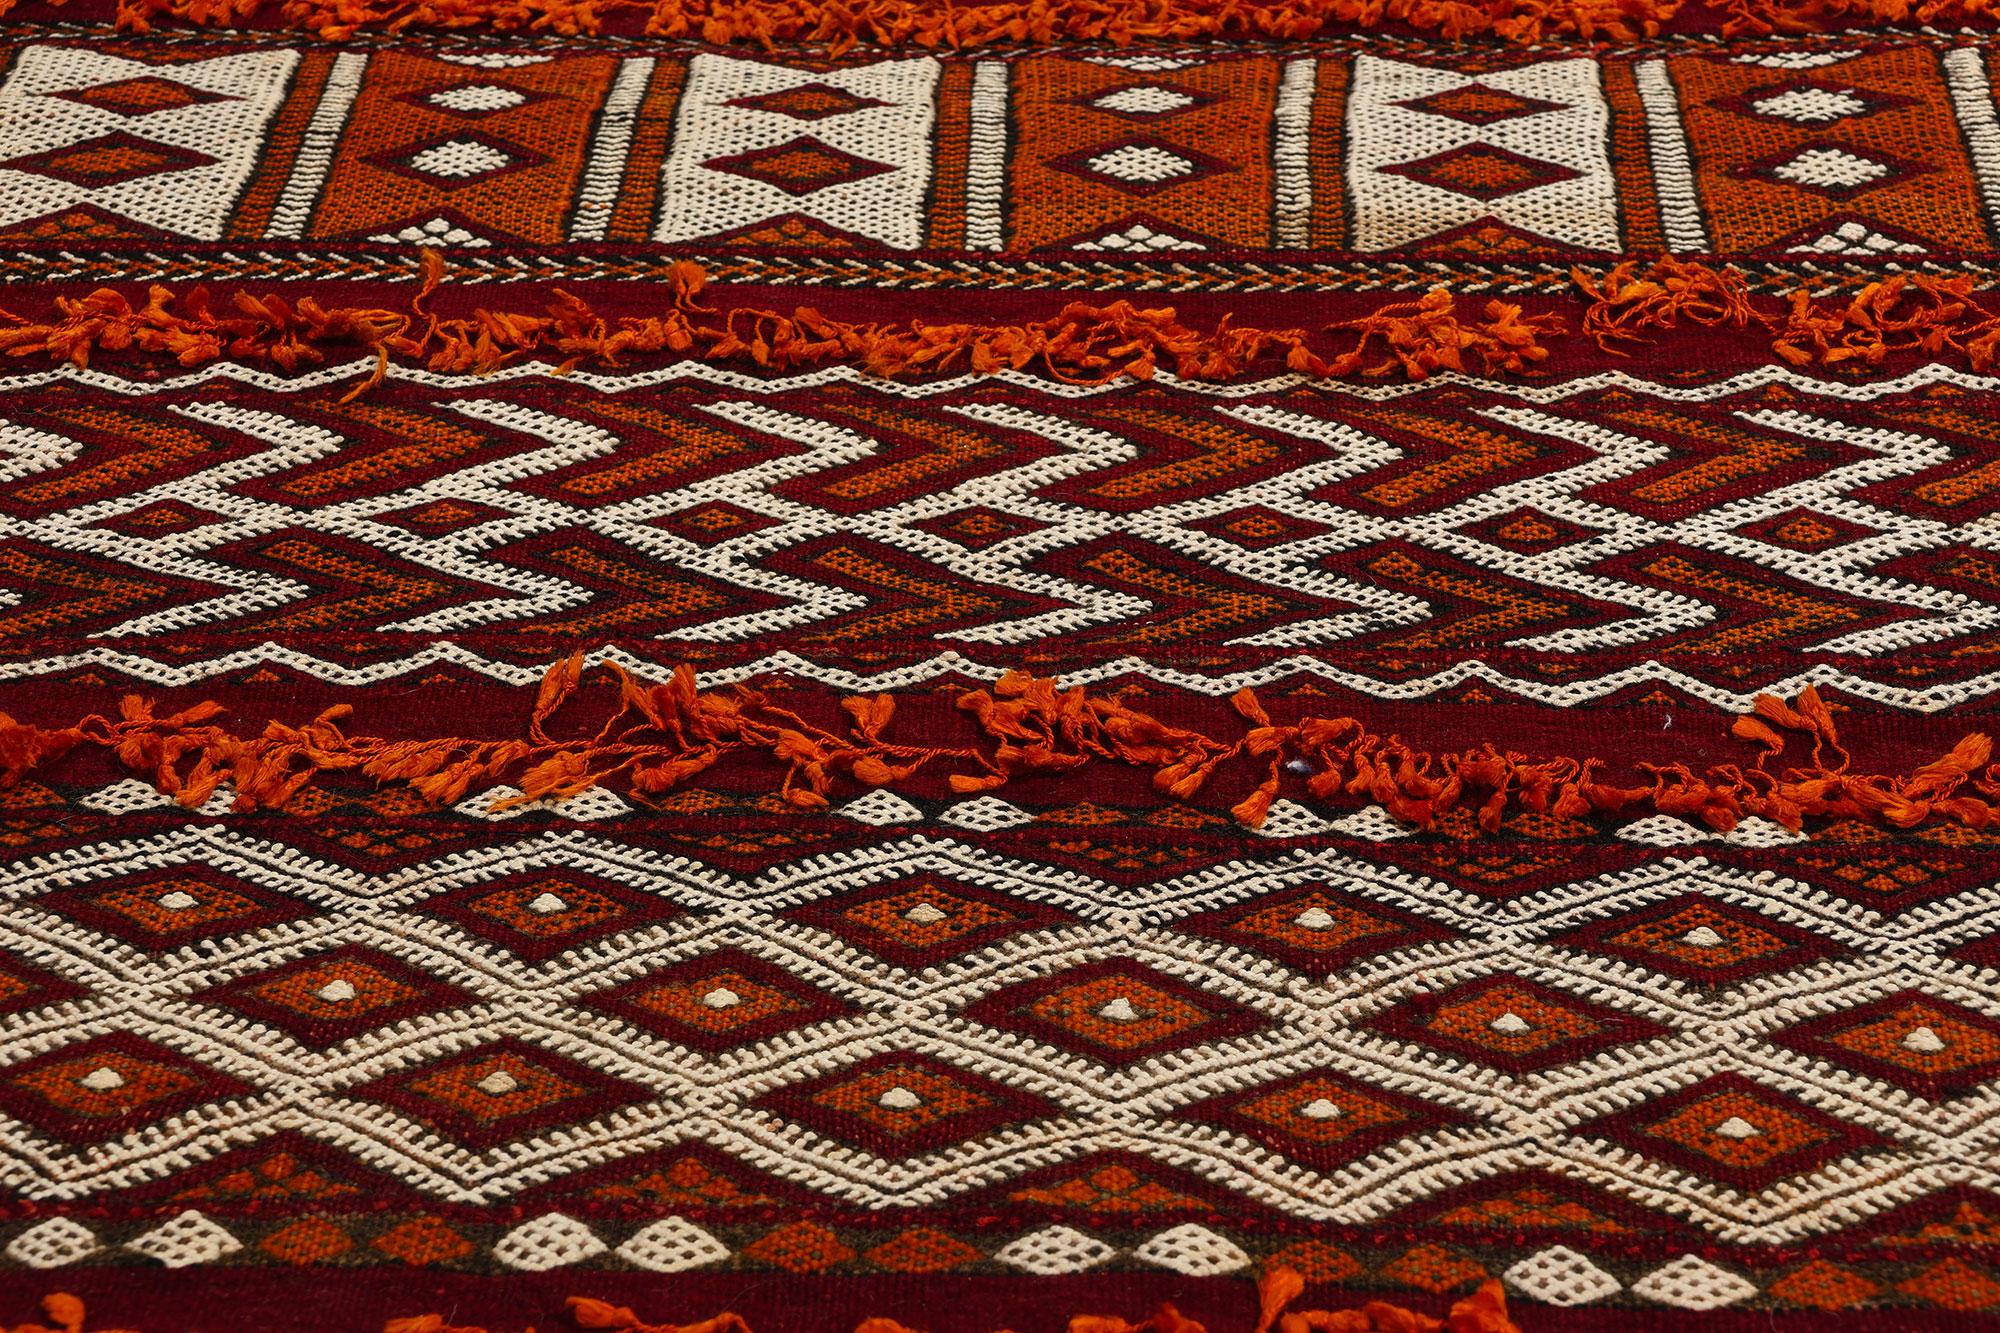 20th Century Midcentury Bohemian Vintage Moroccan Zemmour Kilim Berber Rug, 03'02 x 23'02 For Sale